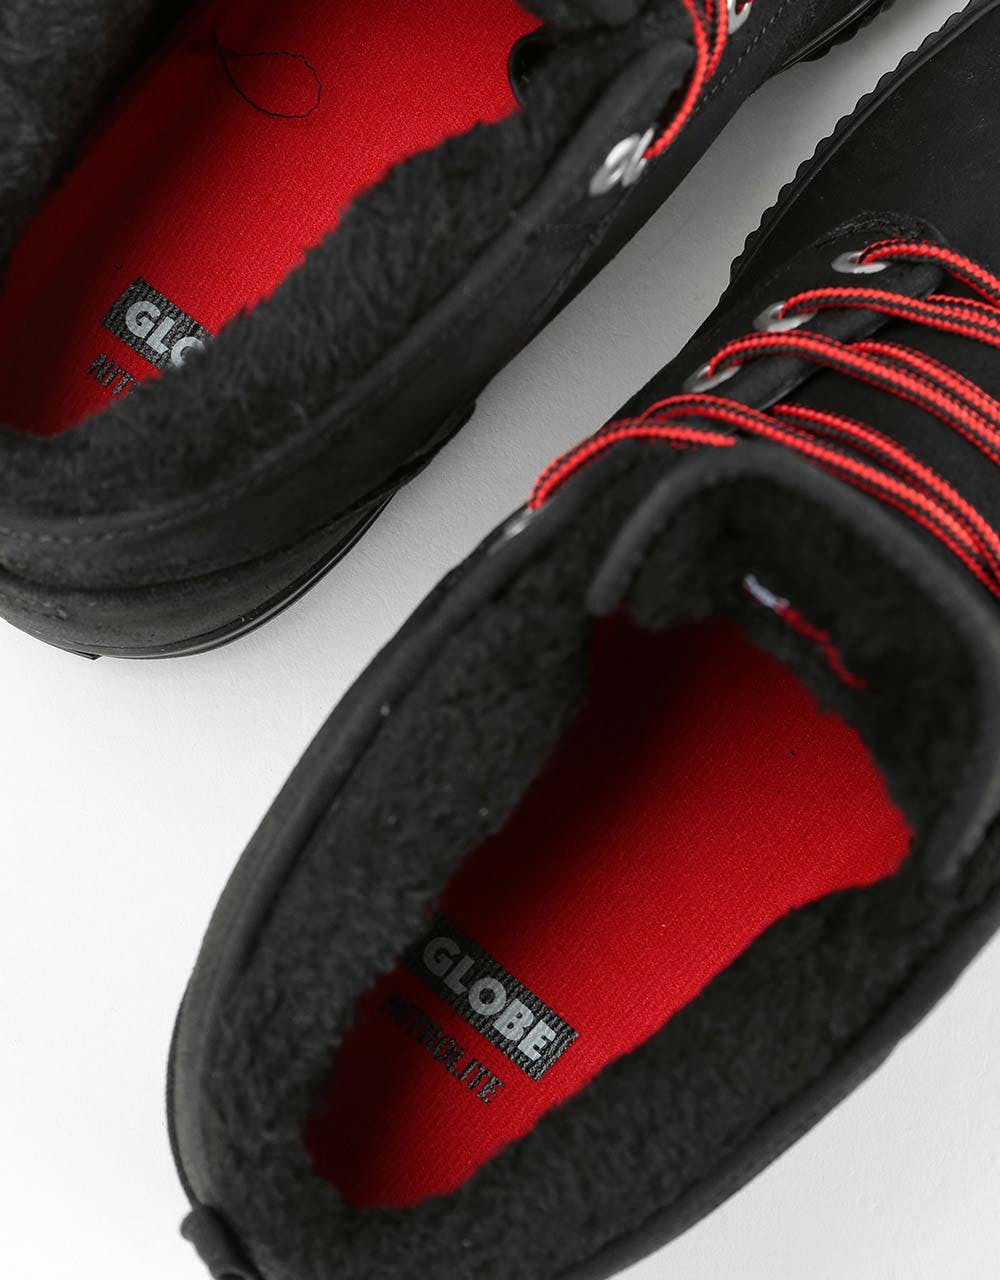 Globe Motley Mid Skate Shoes - Black/Red/Fur